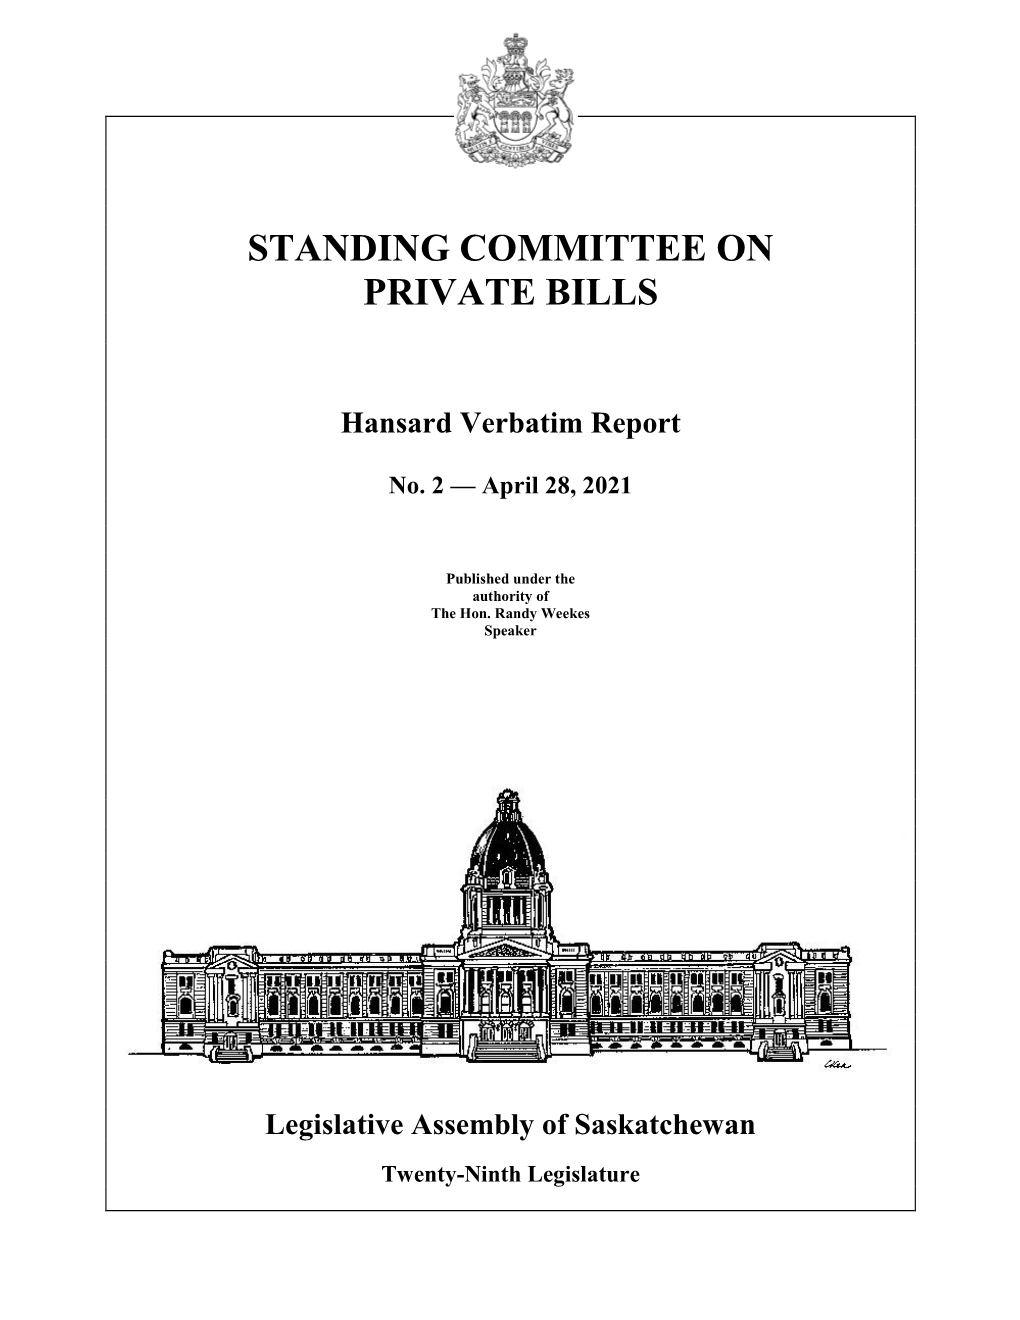 April 28, 2021 Private Bills Committee 5